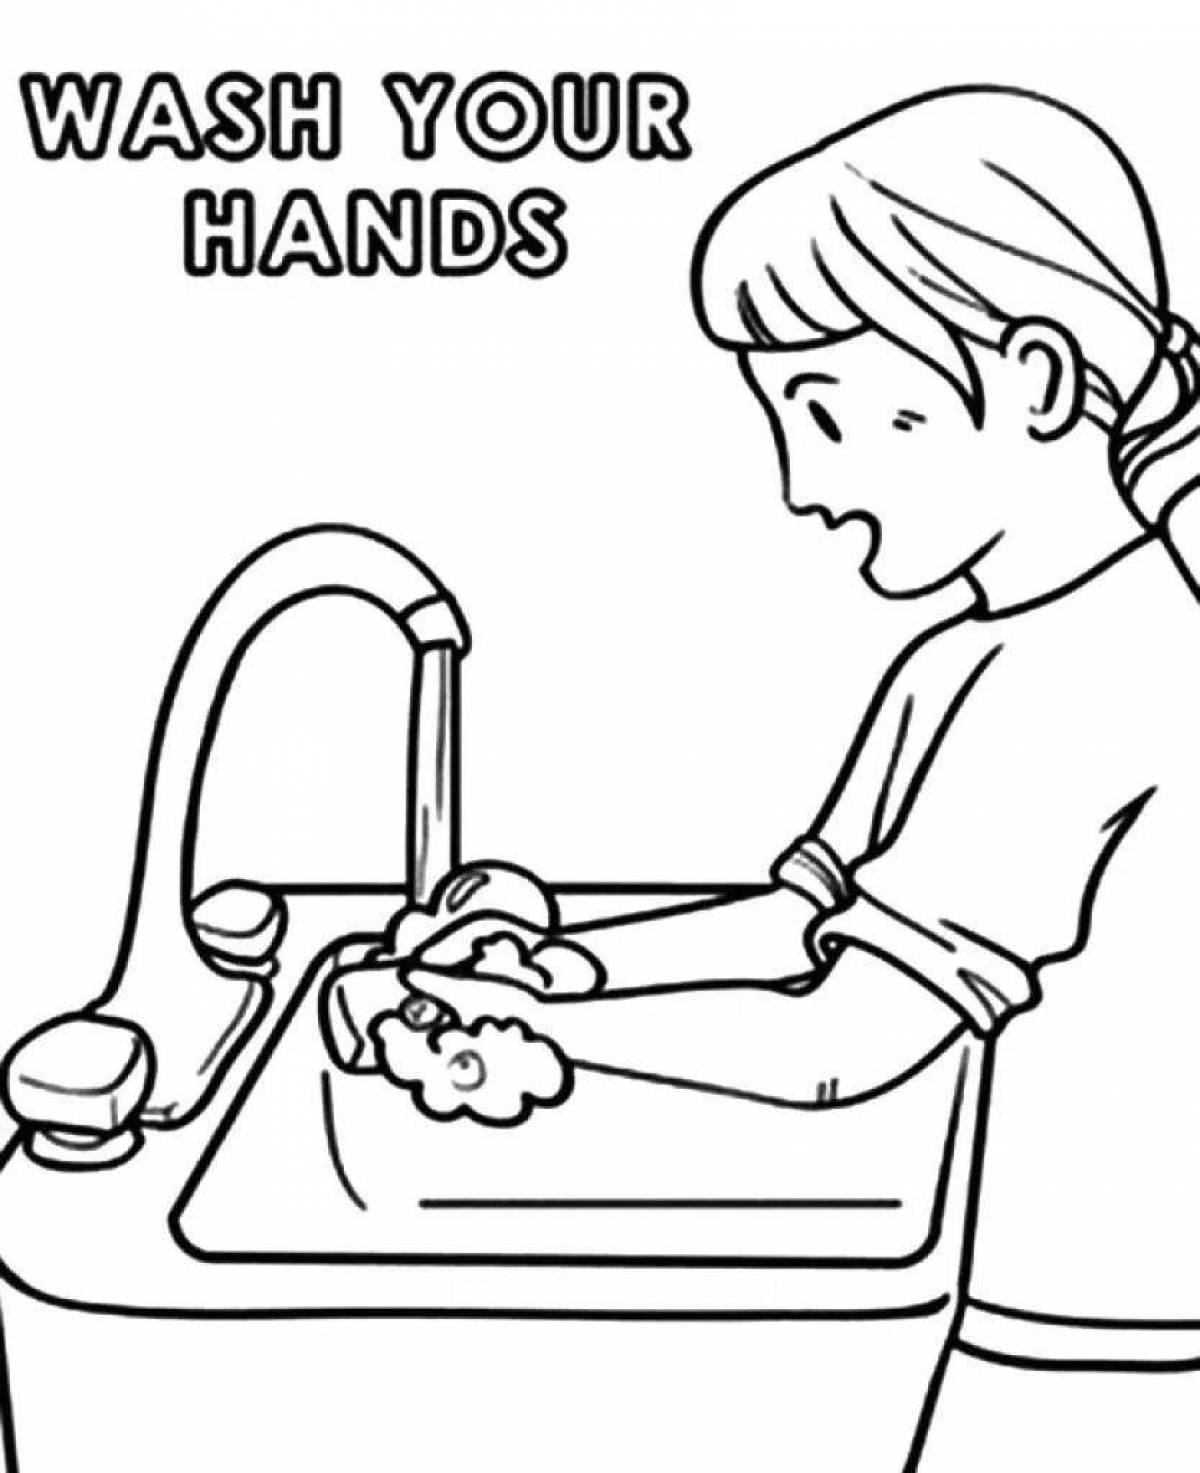 Wash hands #3